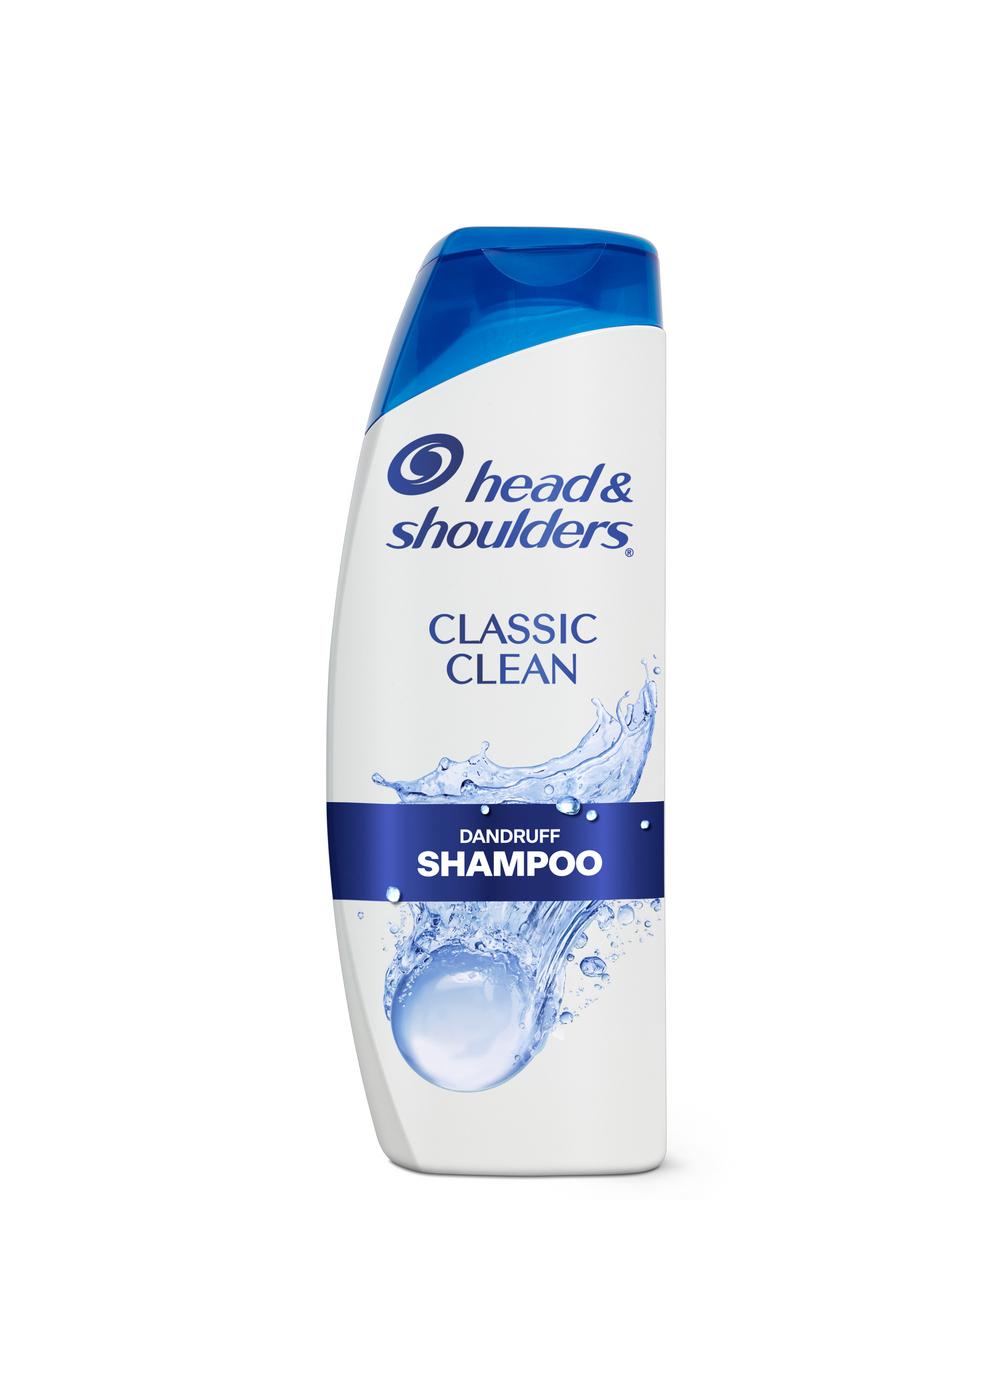 Head & Shoulders Dandruff Shampoo - Classic Clean; image 8 of 11